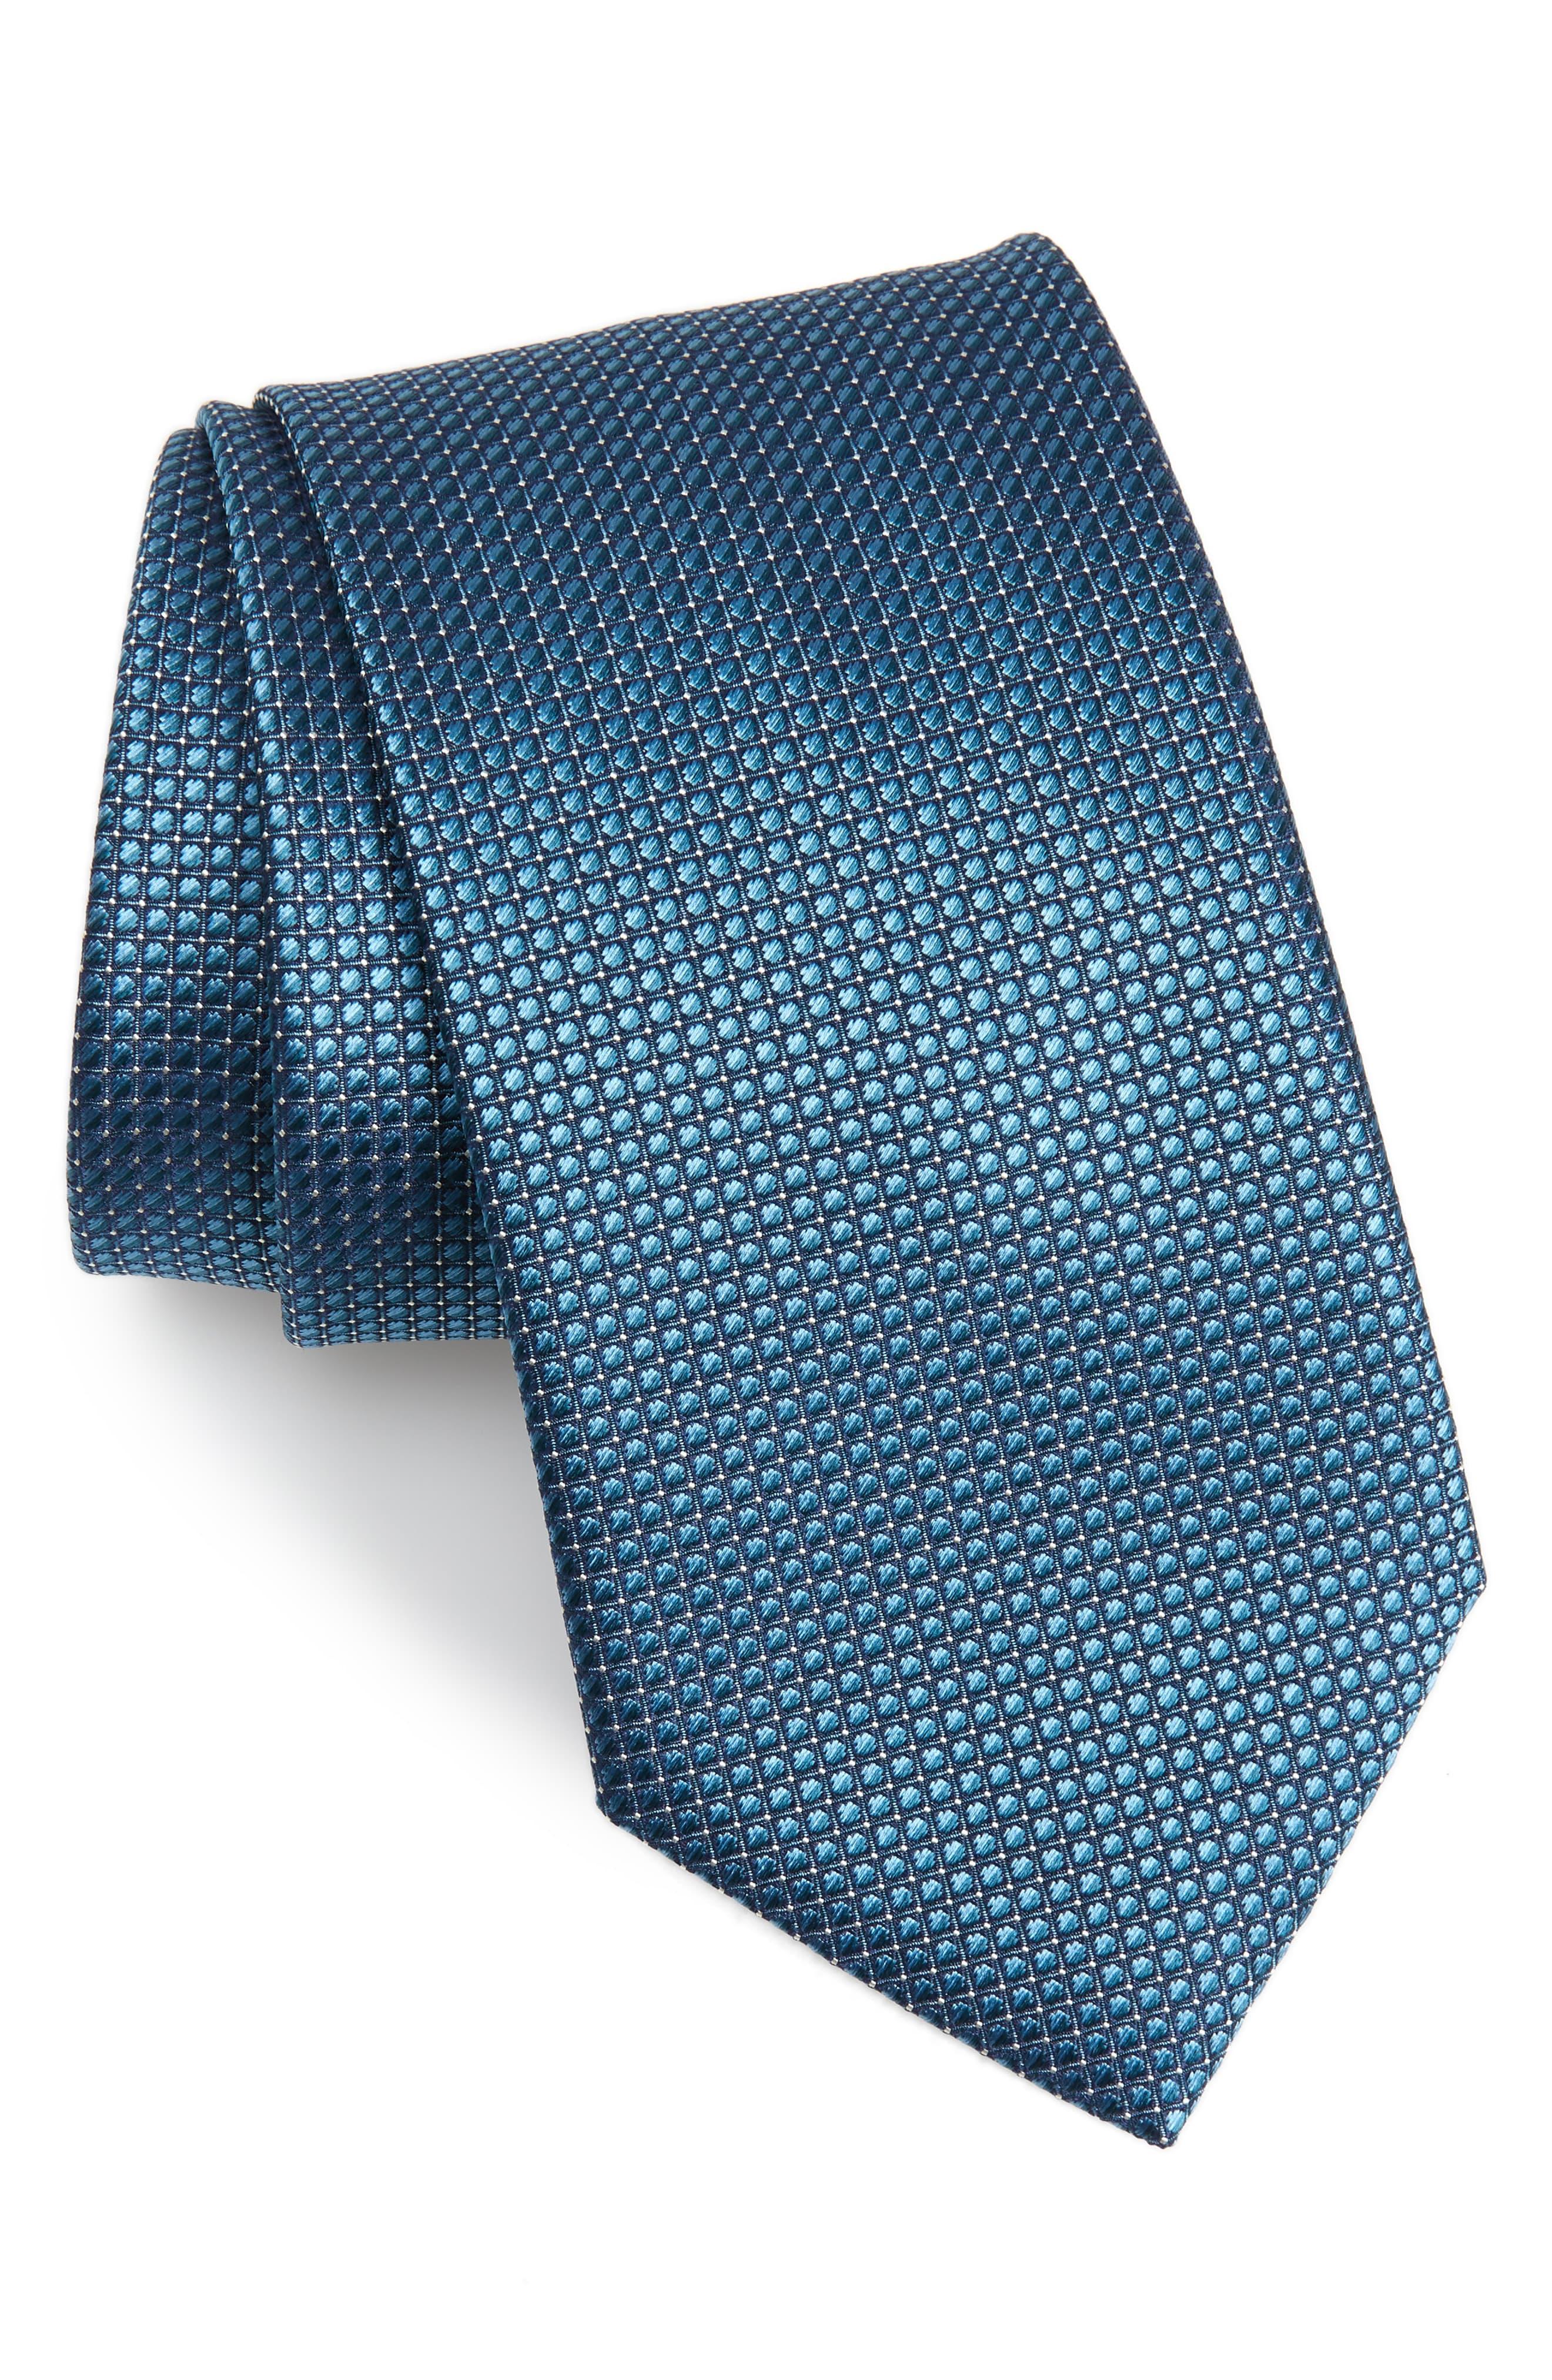 Brioni Geometric Silk Tie in Blue for Men - Lyst